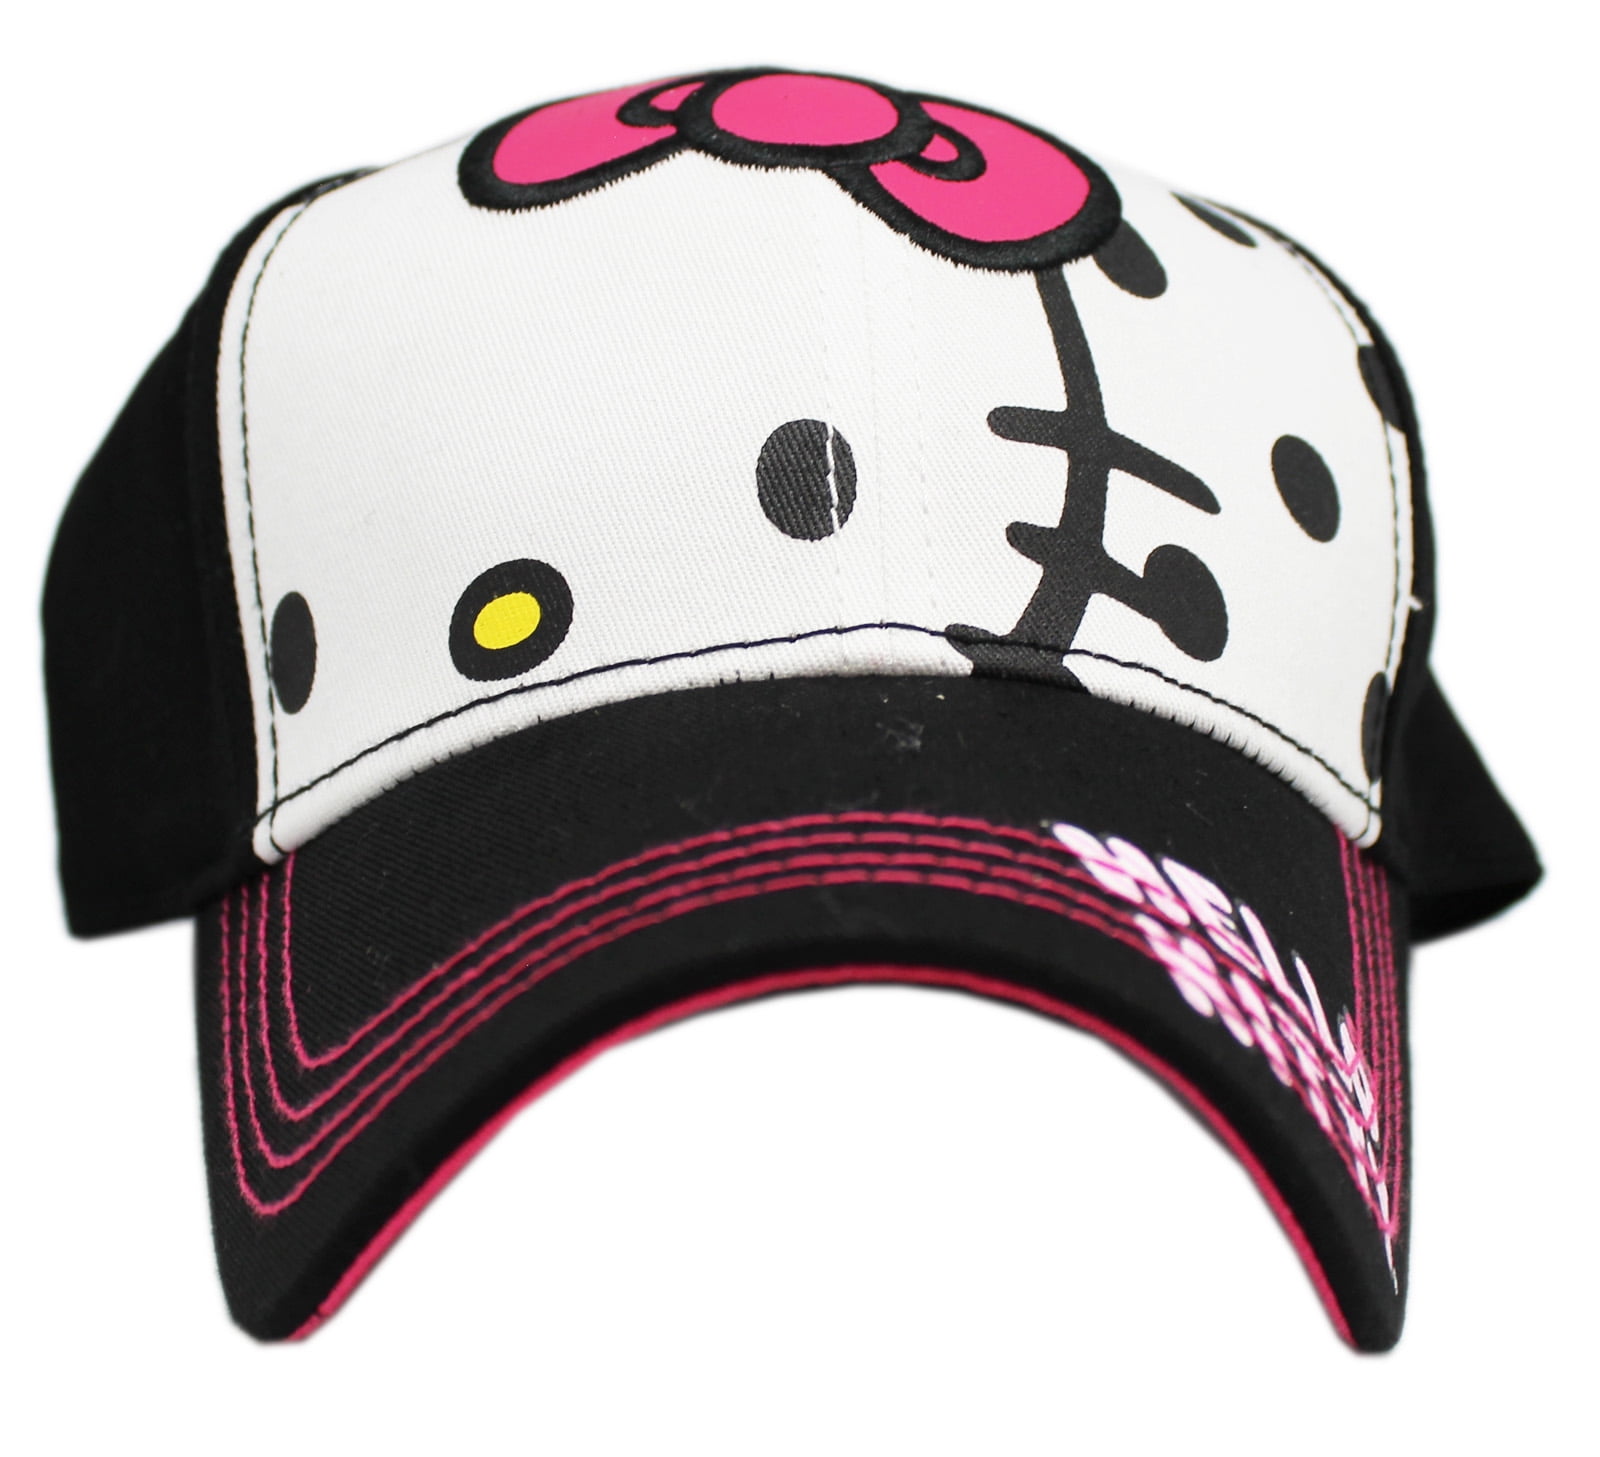 BWR Hello Kitty Childs Baseball Cap 4-8 Years Pink/Gray 